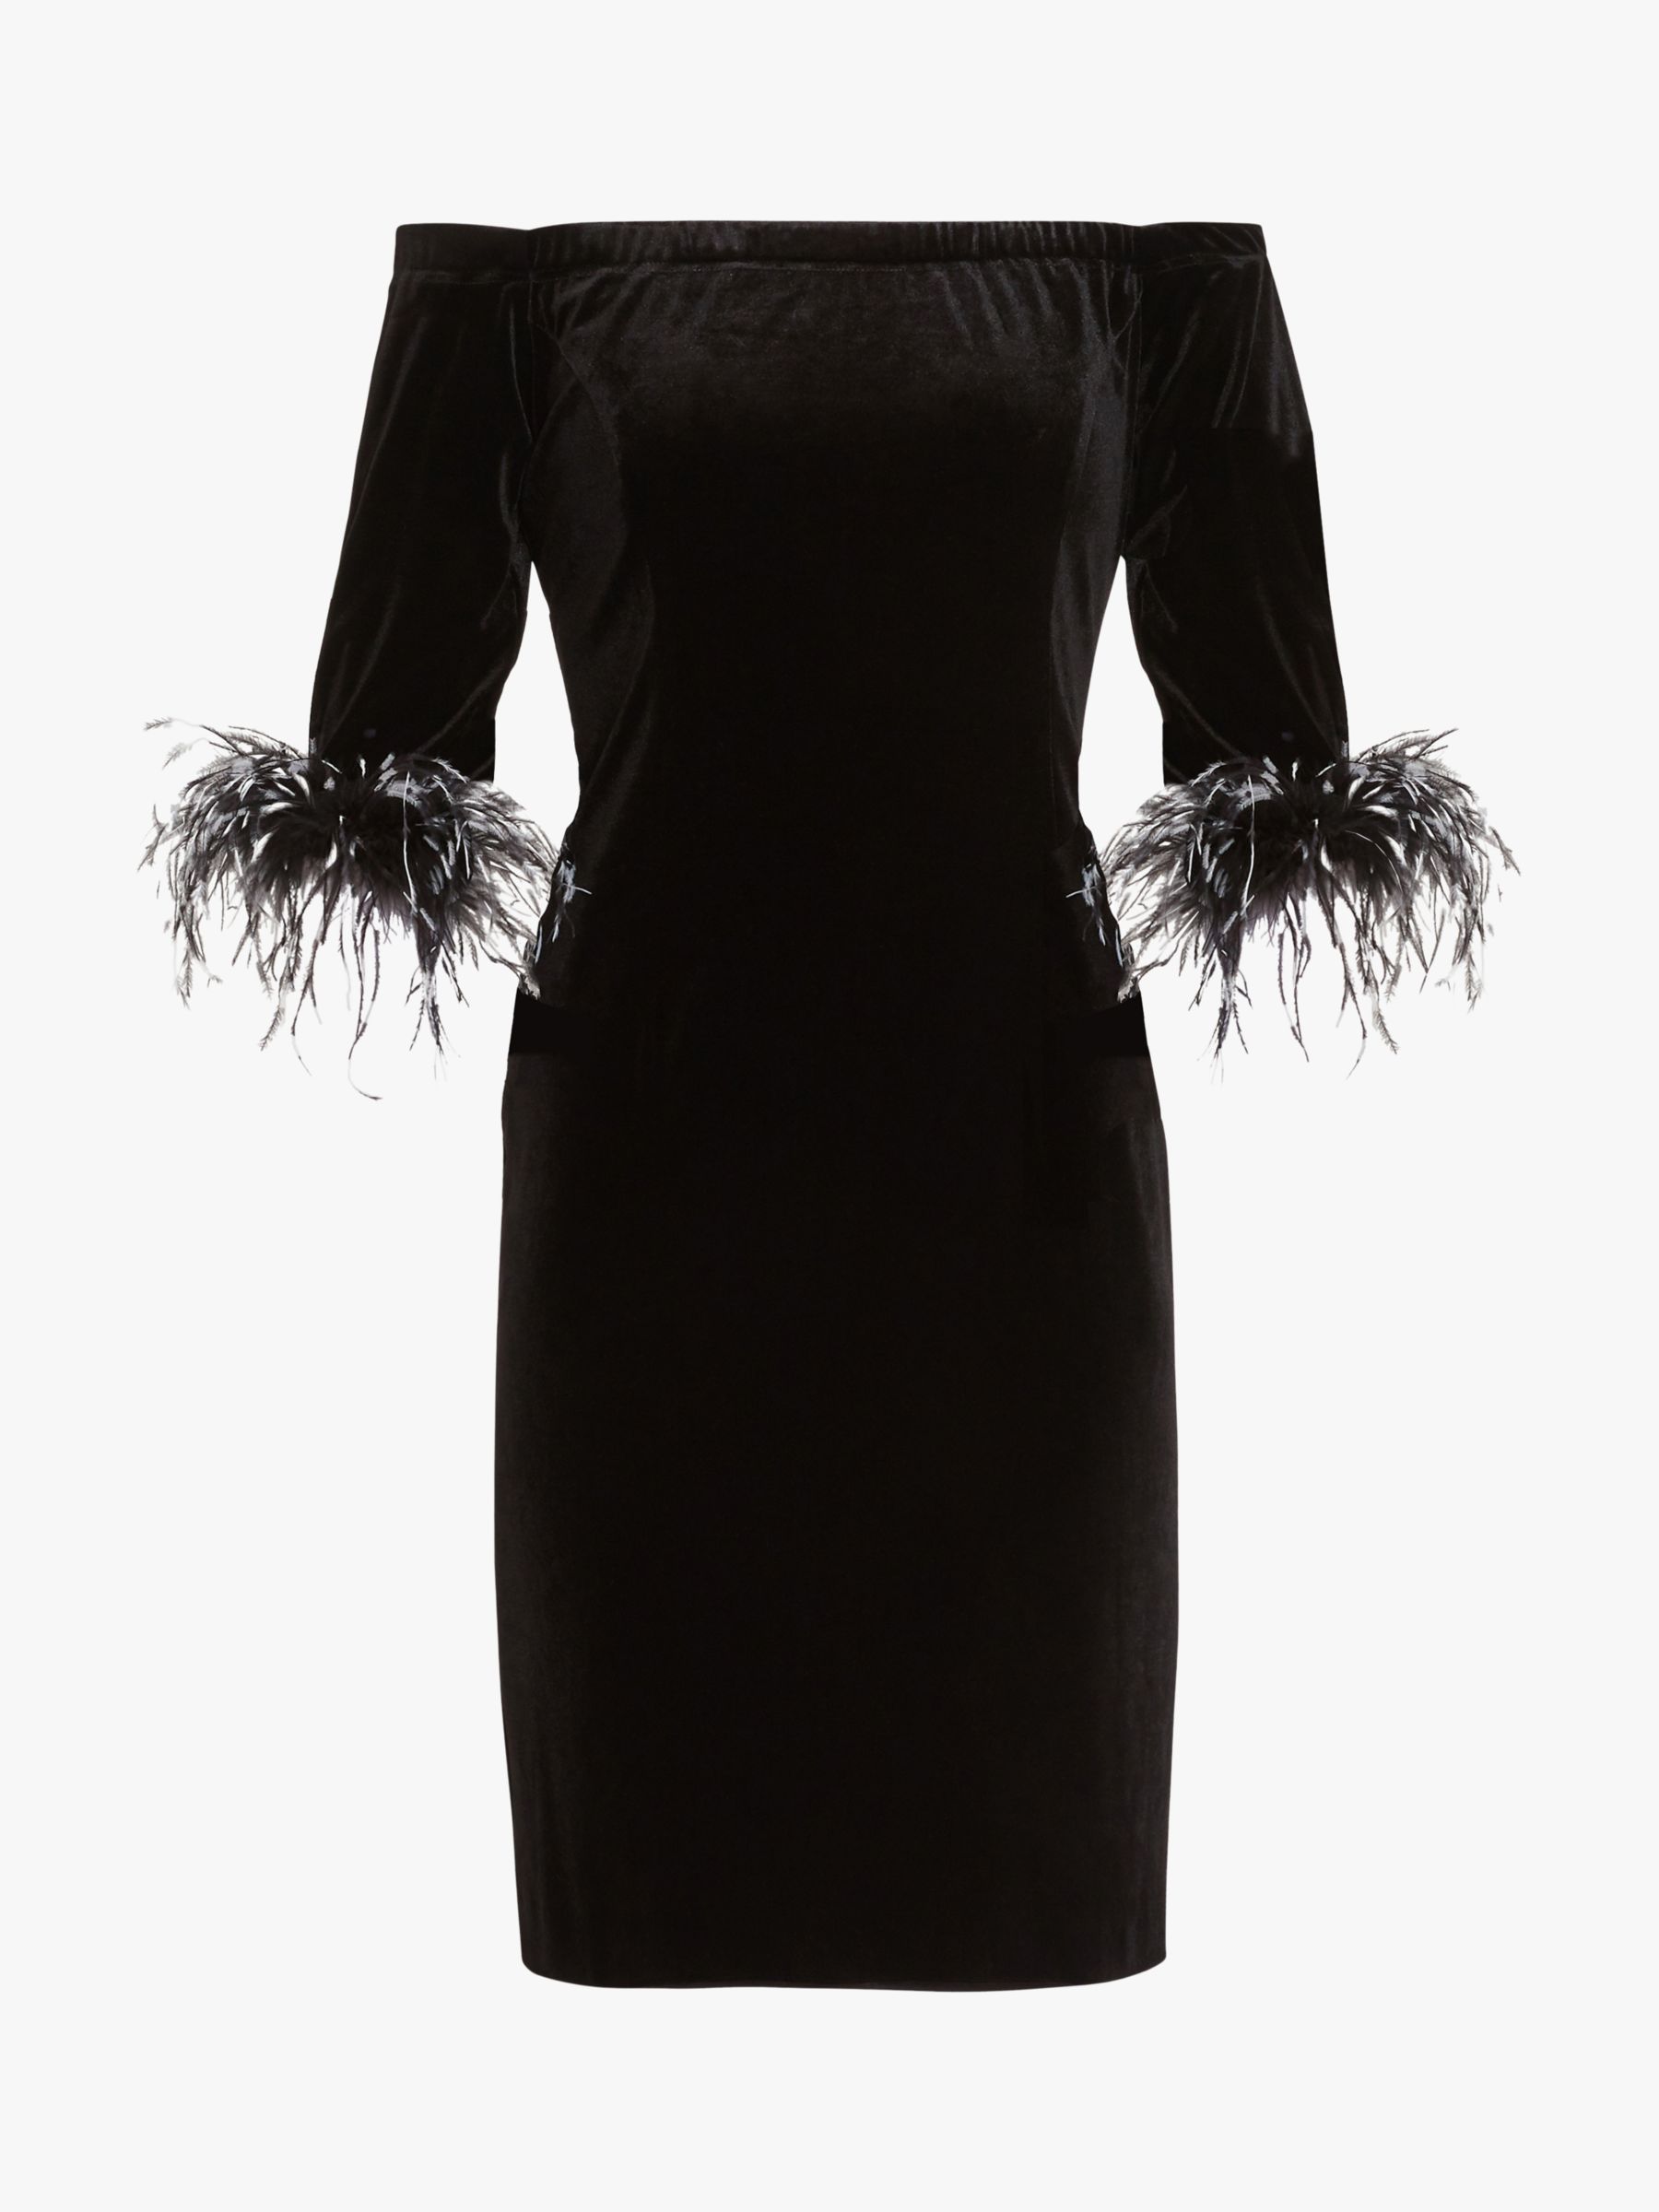 Gina Bacconi Jorelle Velvet Bardot Dress, Black at John Lewis & Partners